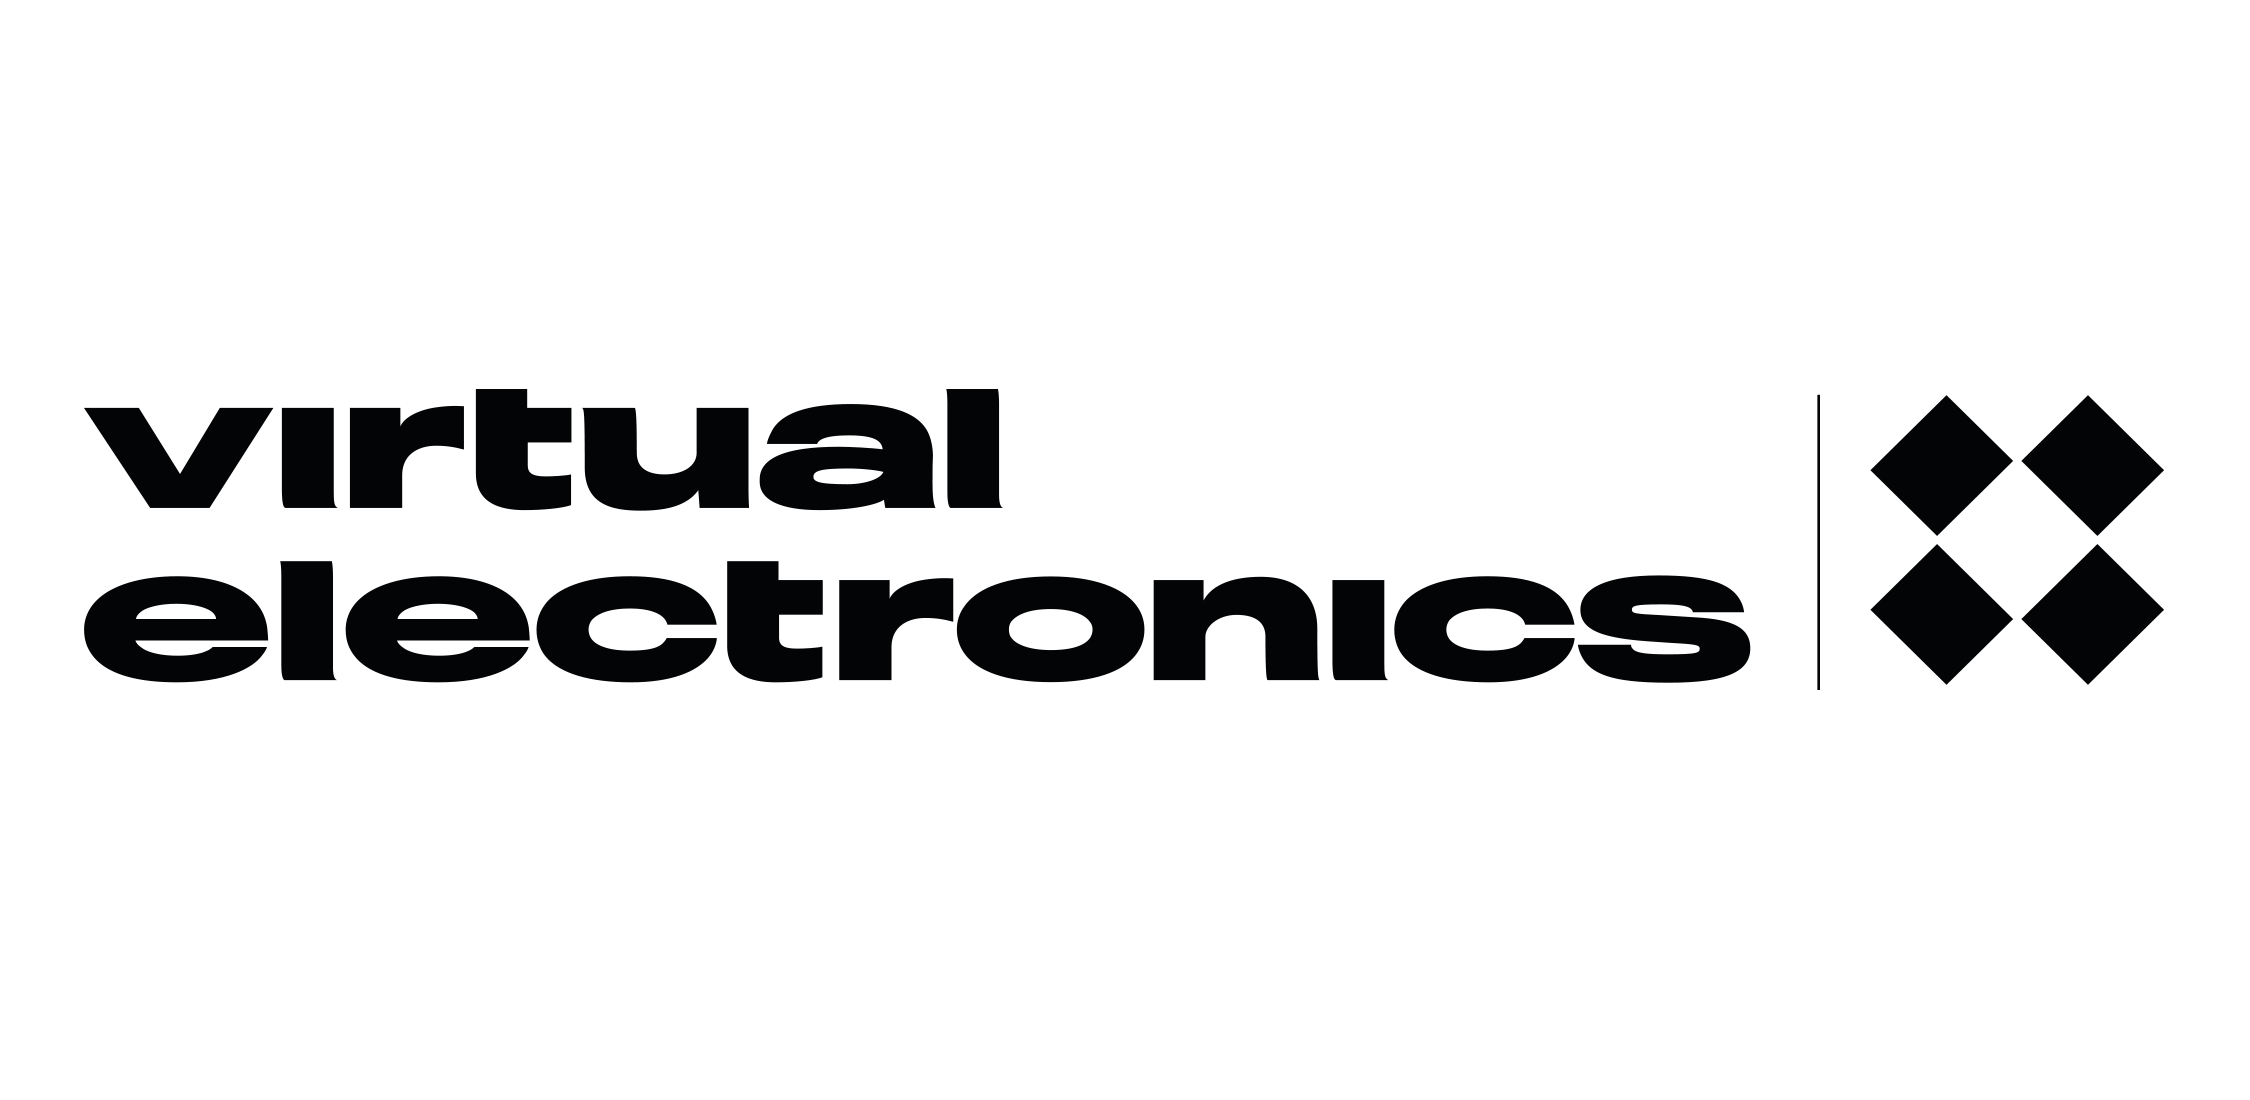 virtual electronics logo.png